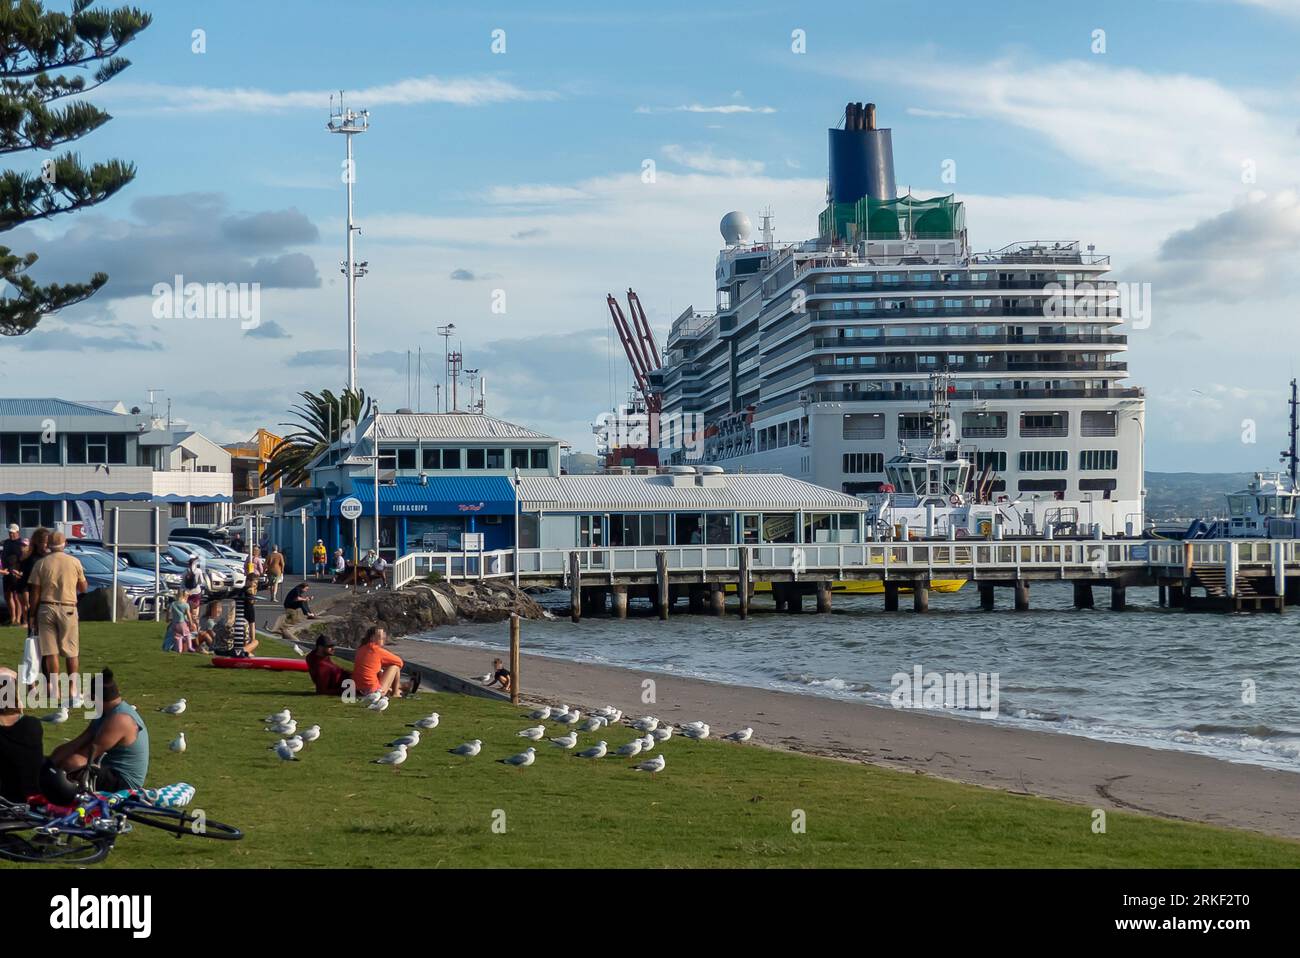 The P & O cruise ship 'Arcadia' in Tauranga Harbour, New Zealand Stock Photo